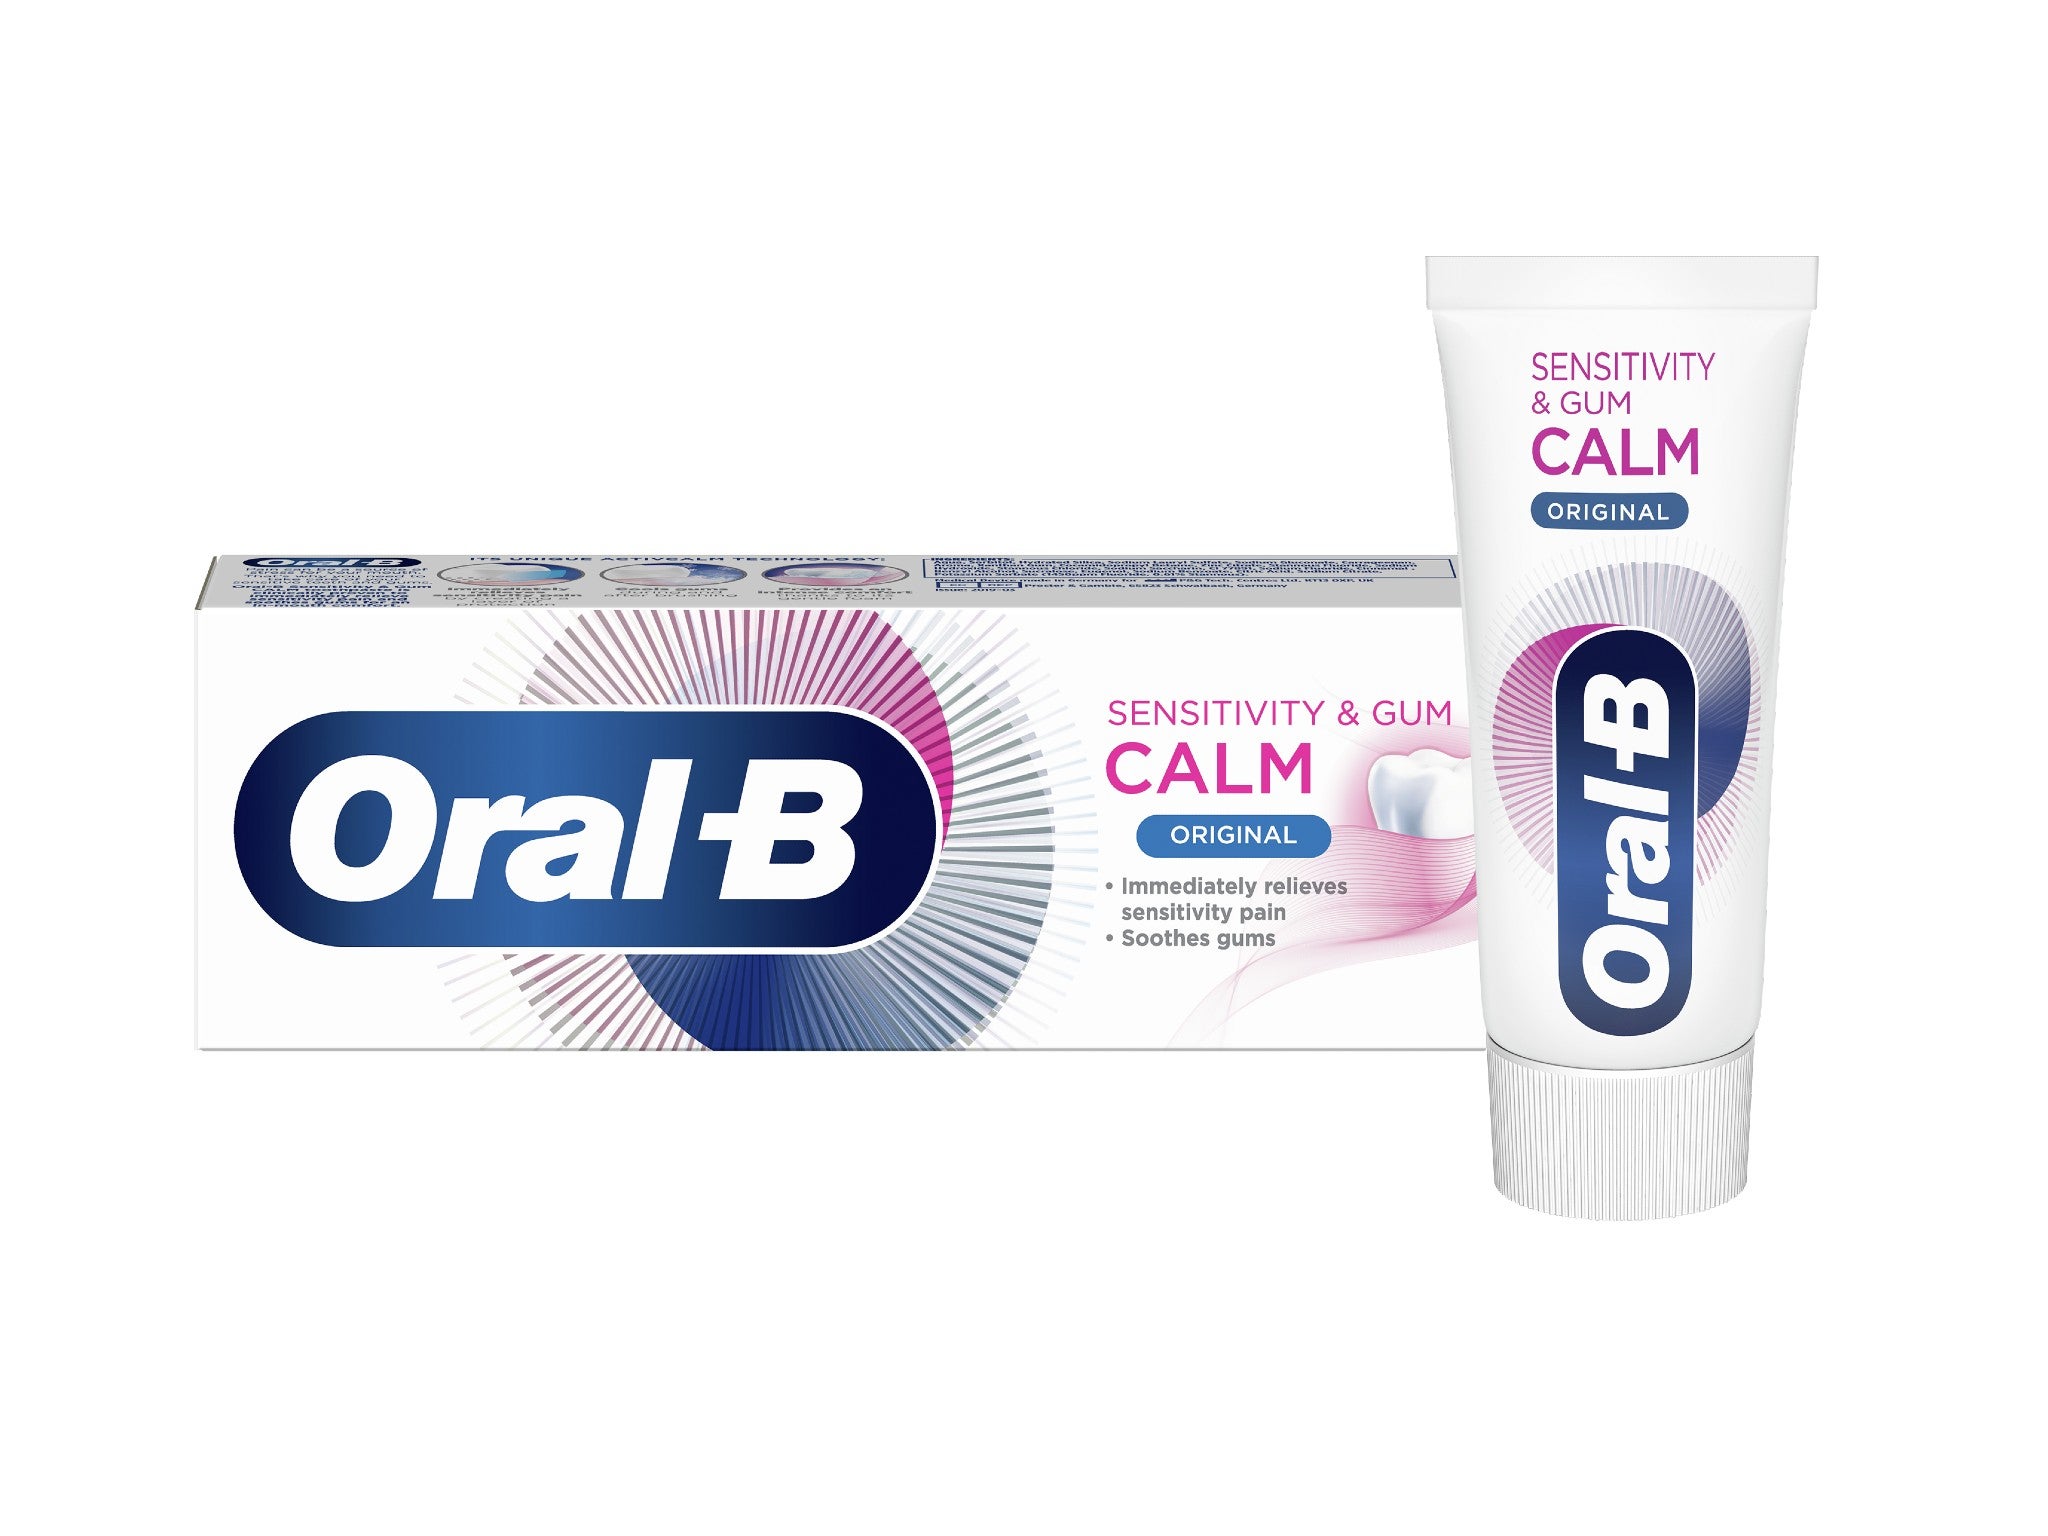 Oral-B sensitivity & gum calm original toothpaste indybest.jpg